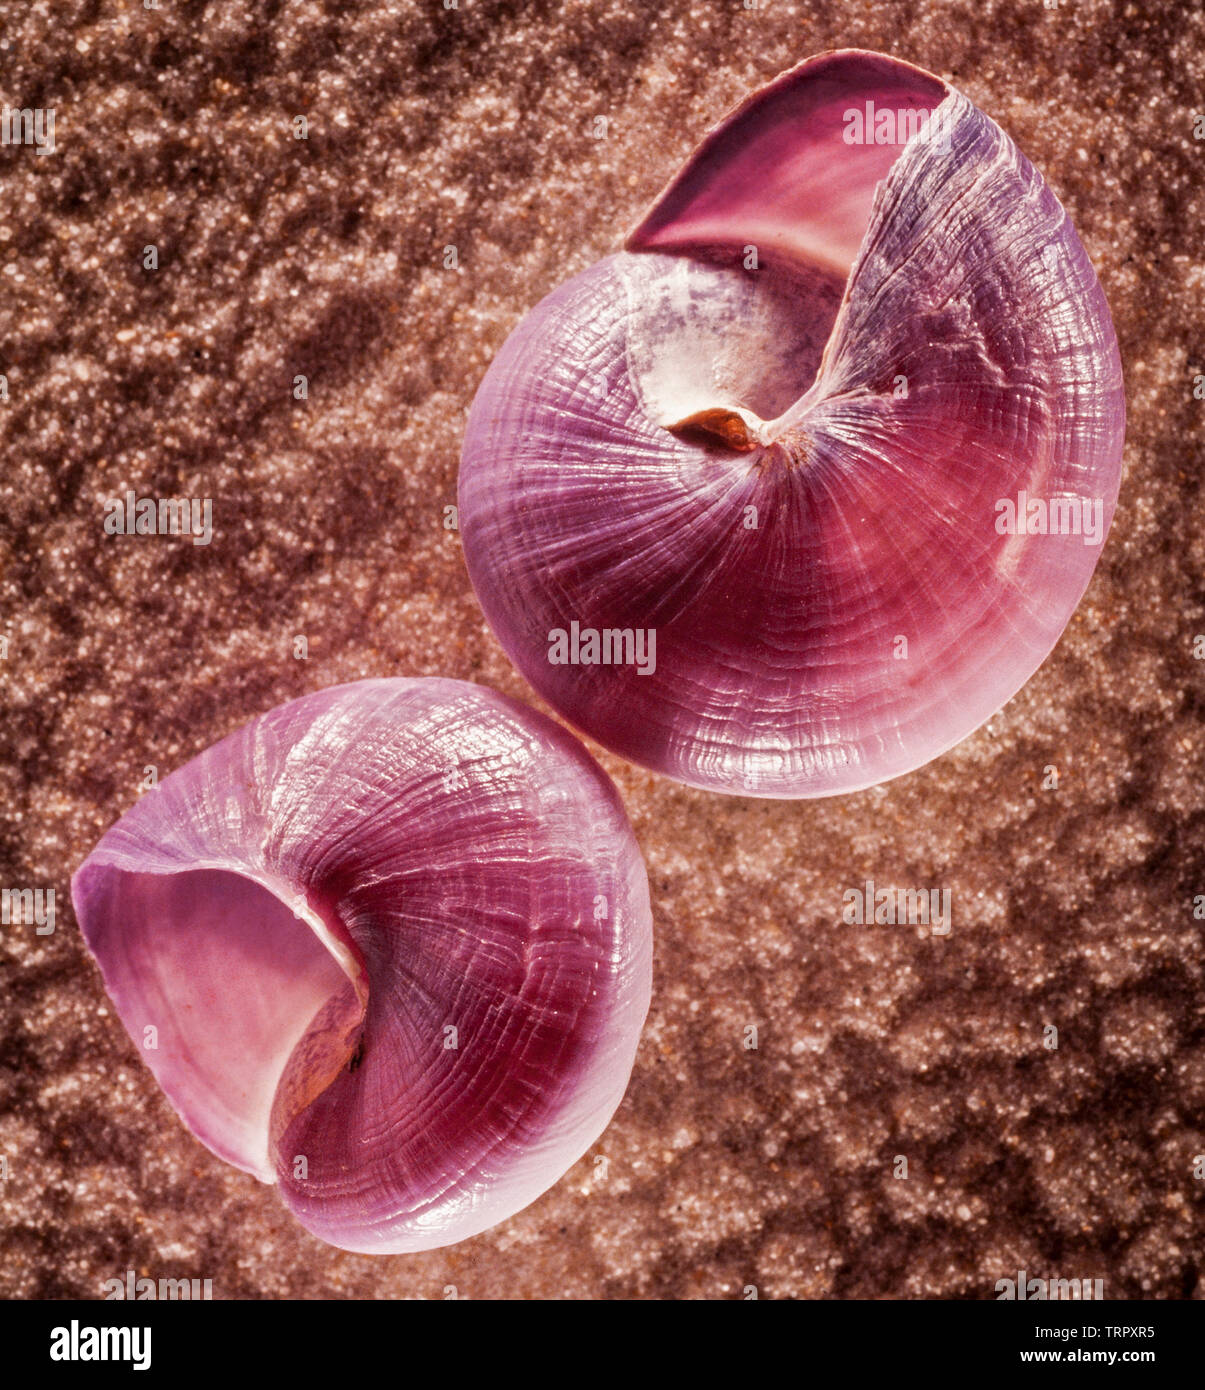 Common purple sea snail, Janthina janthina Linnaeus, on rippled sand Stock Photo